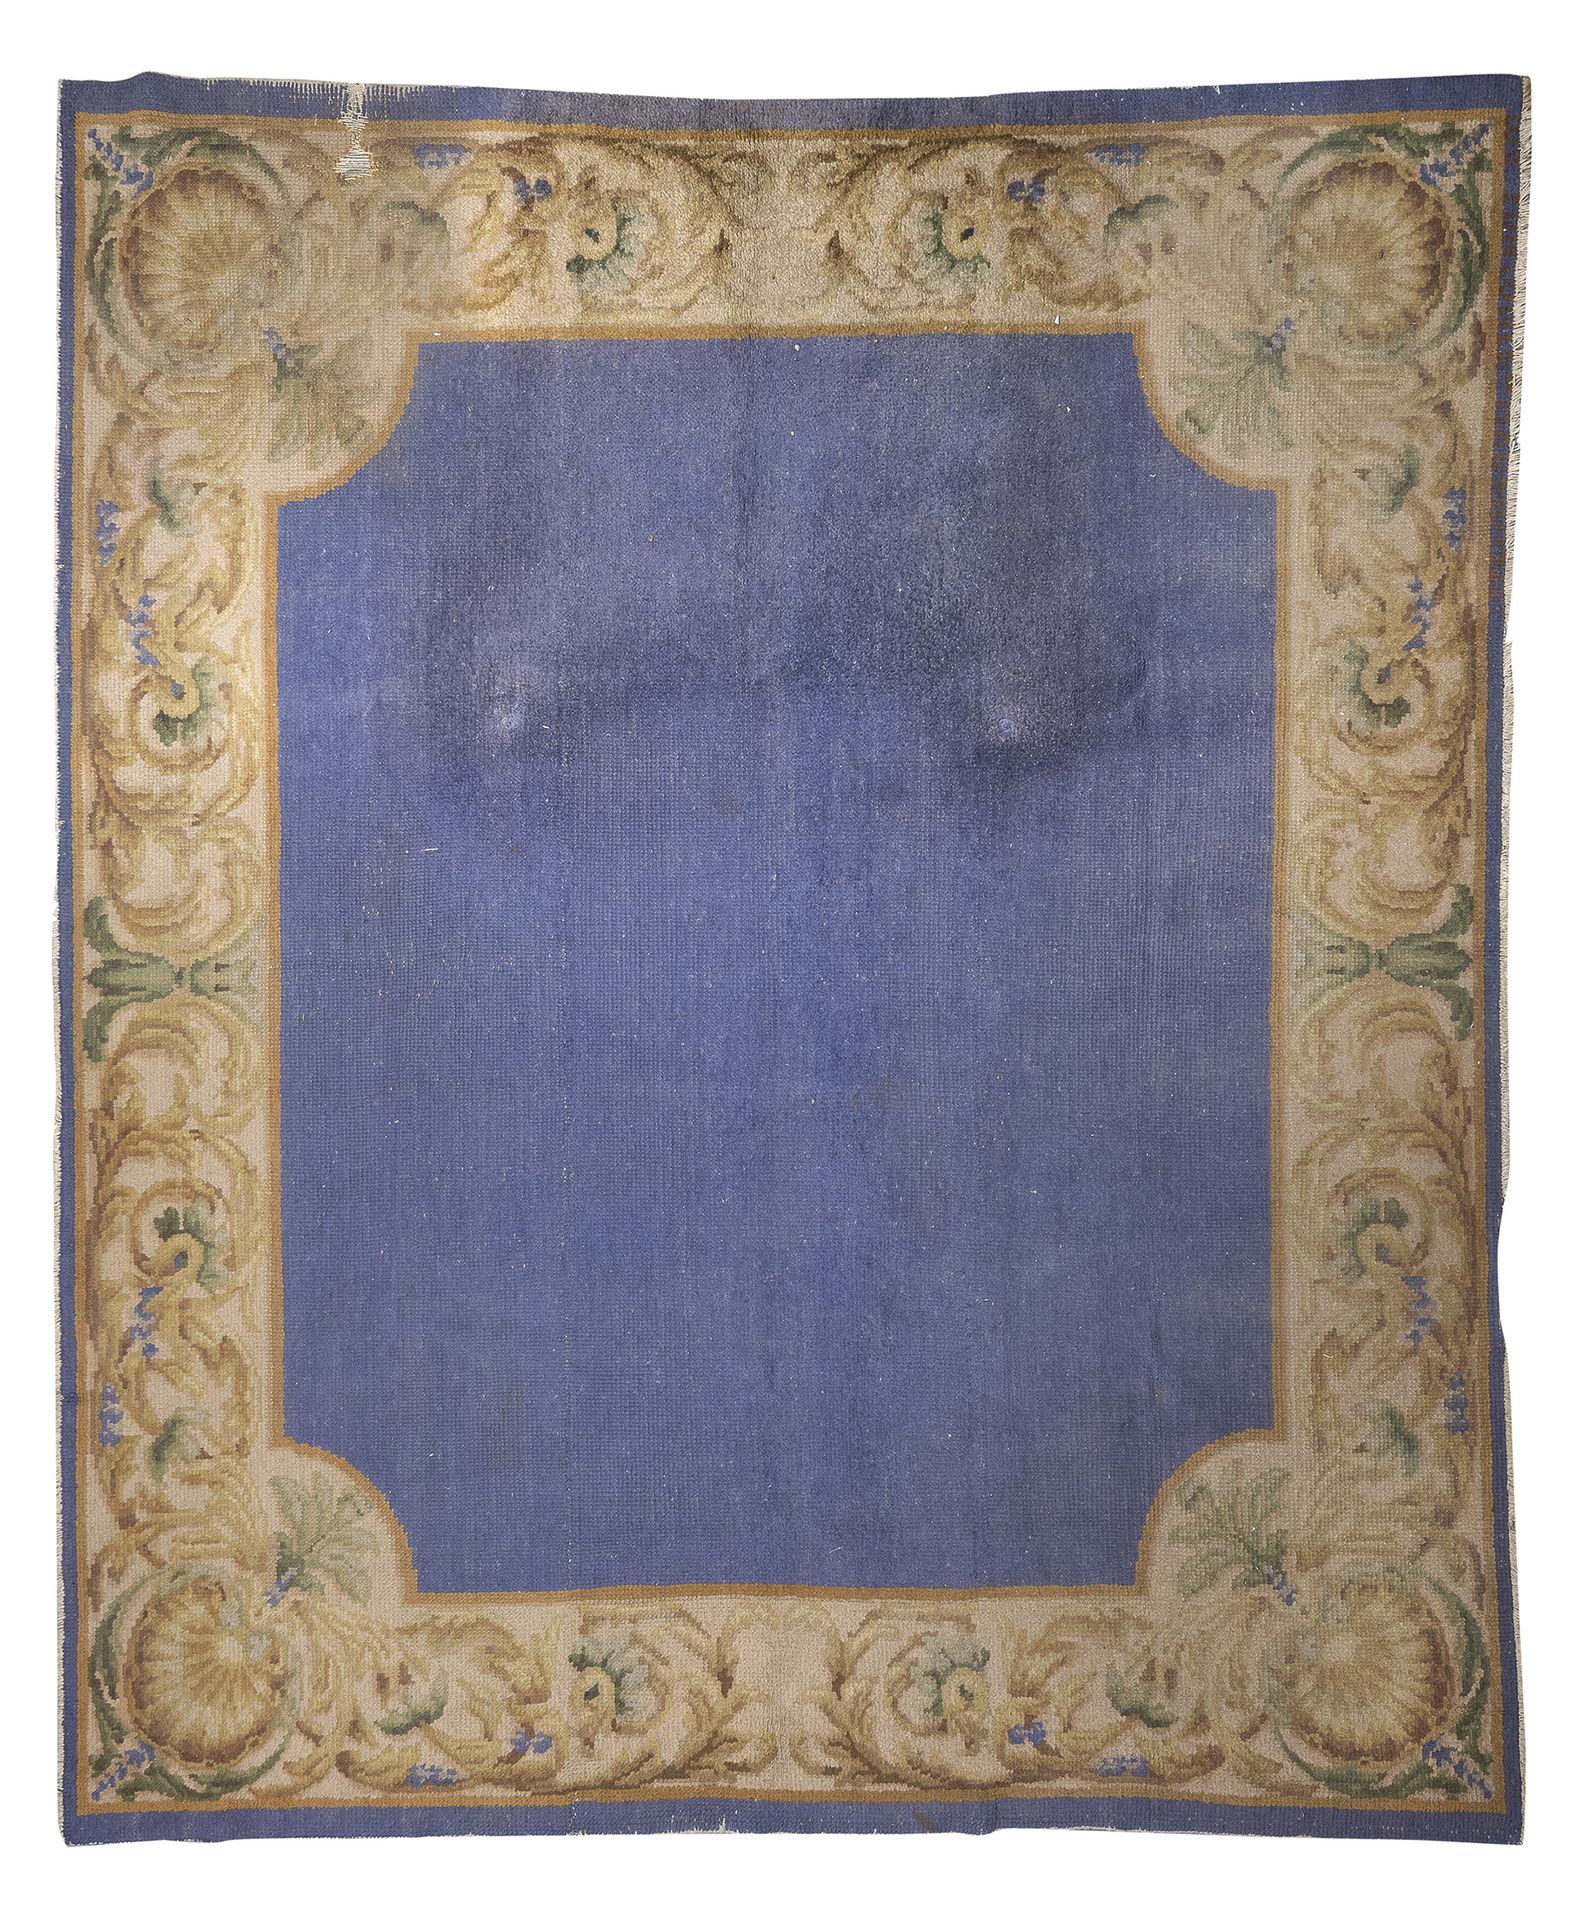 Null 罕见的安纳托利亚斯巴达地毯，20世纪初

粉红色的背景上有一个空的中心领域，边框是西方影响的挂毯图案。

尺寸为360 x 295厘米。

撕裂，短的&hellip;